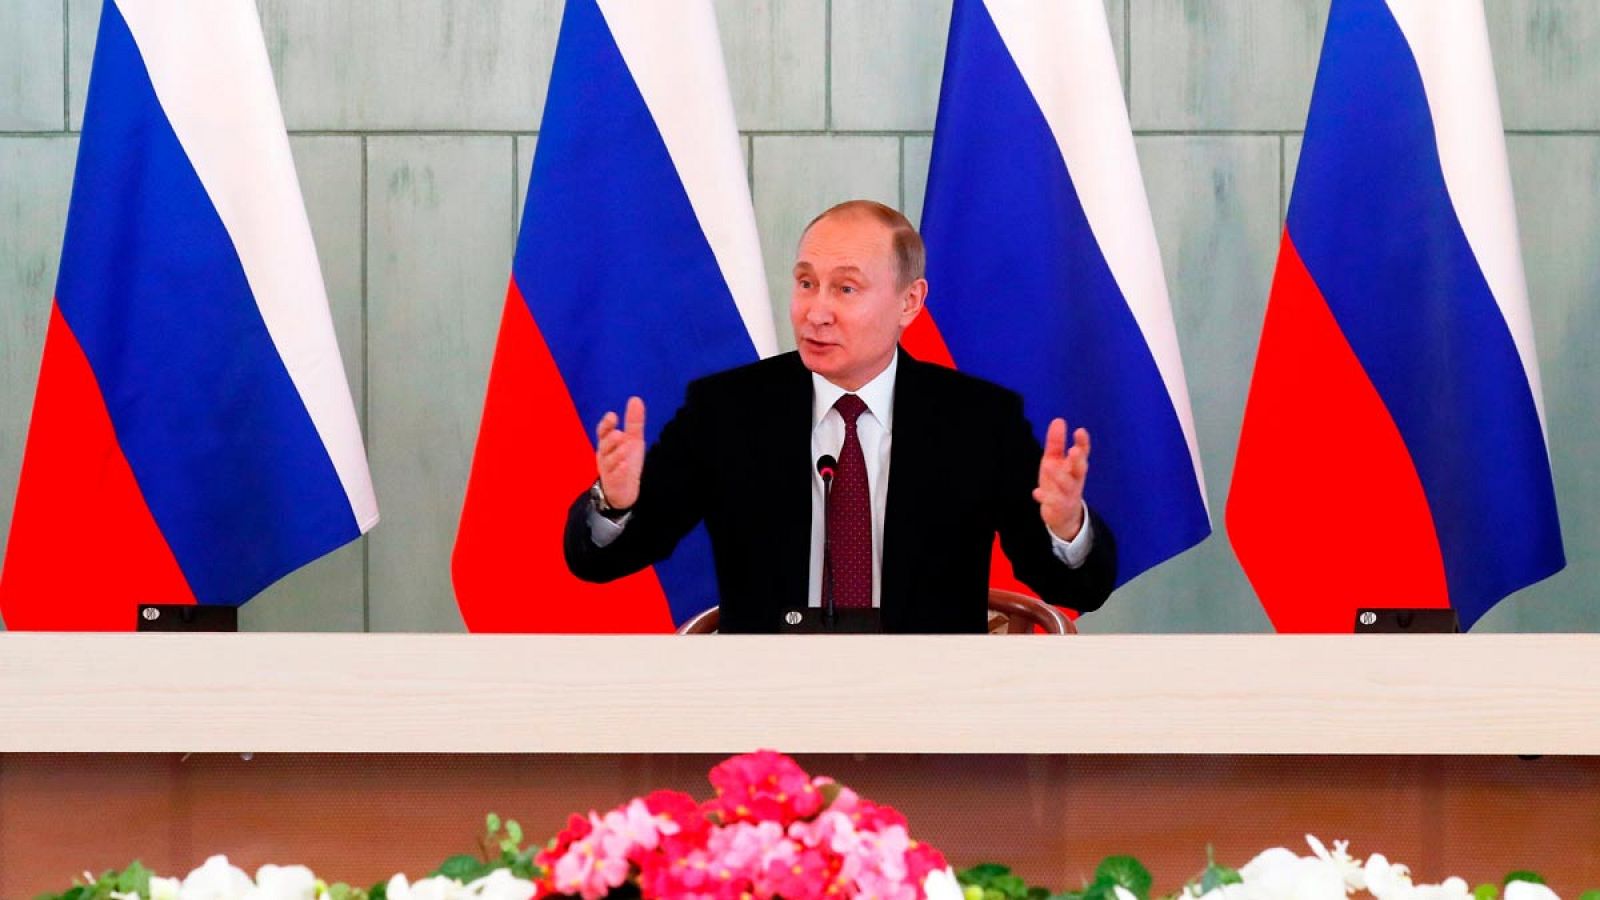  Reportajes 5 continentes - Presidenciales en Rusia: ¿Un paseo imperial para Putin? - Escuchar ahora